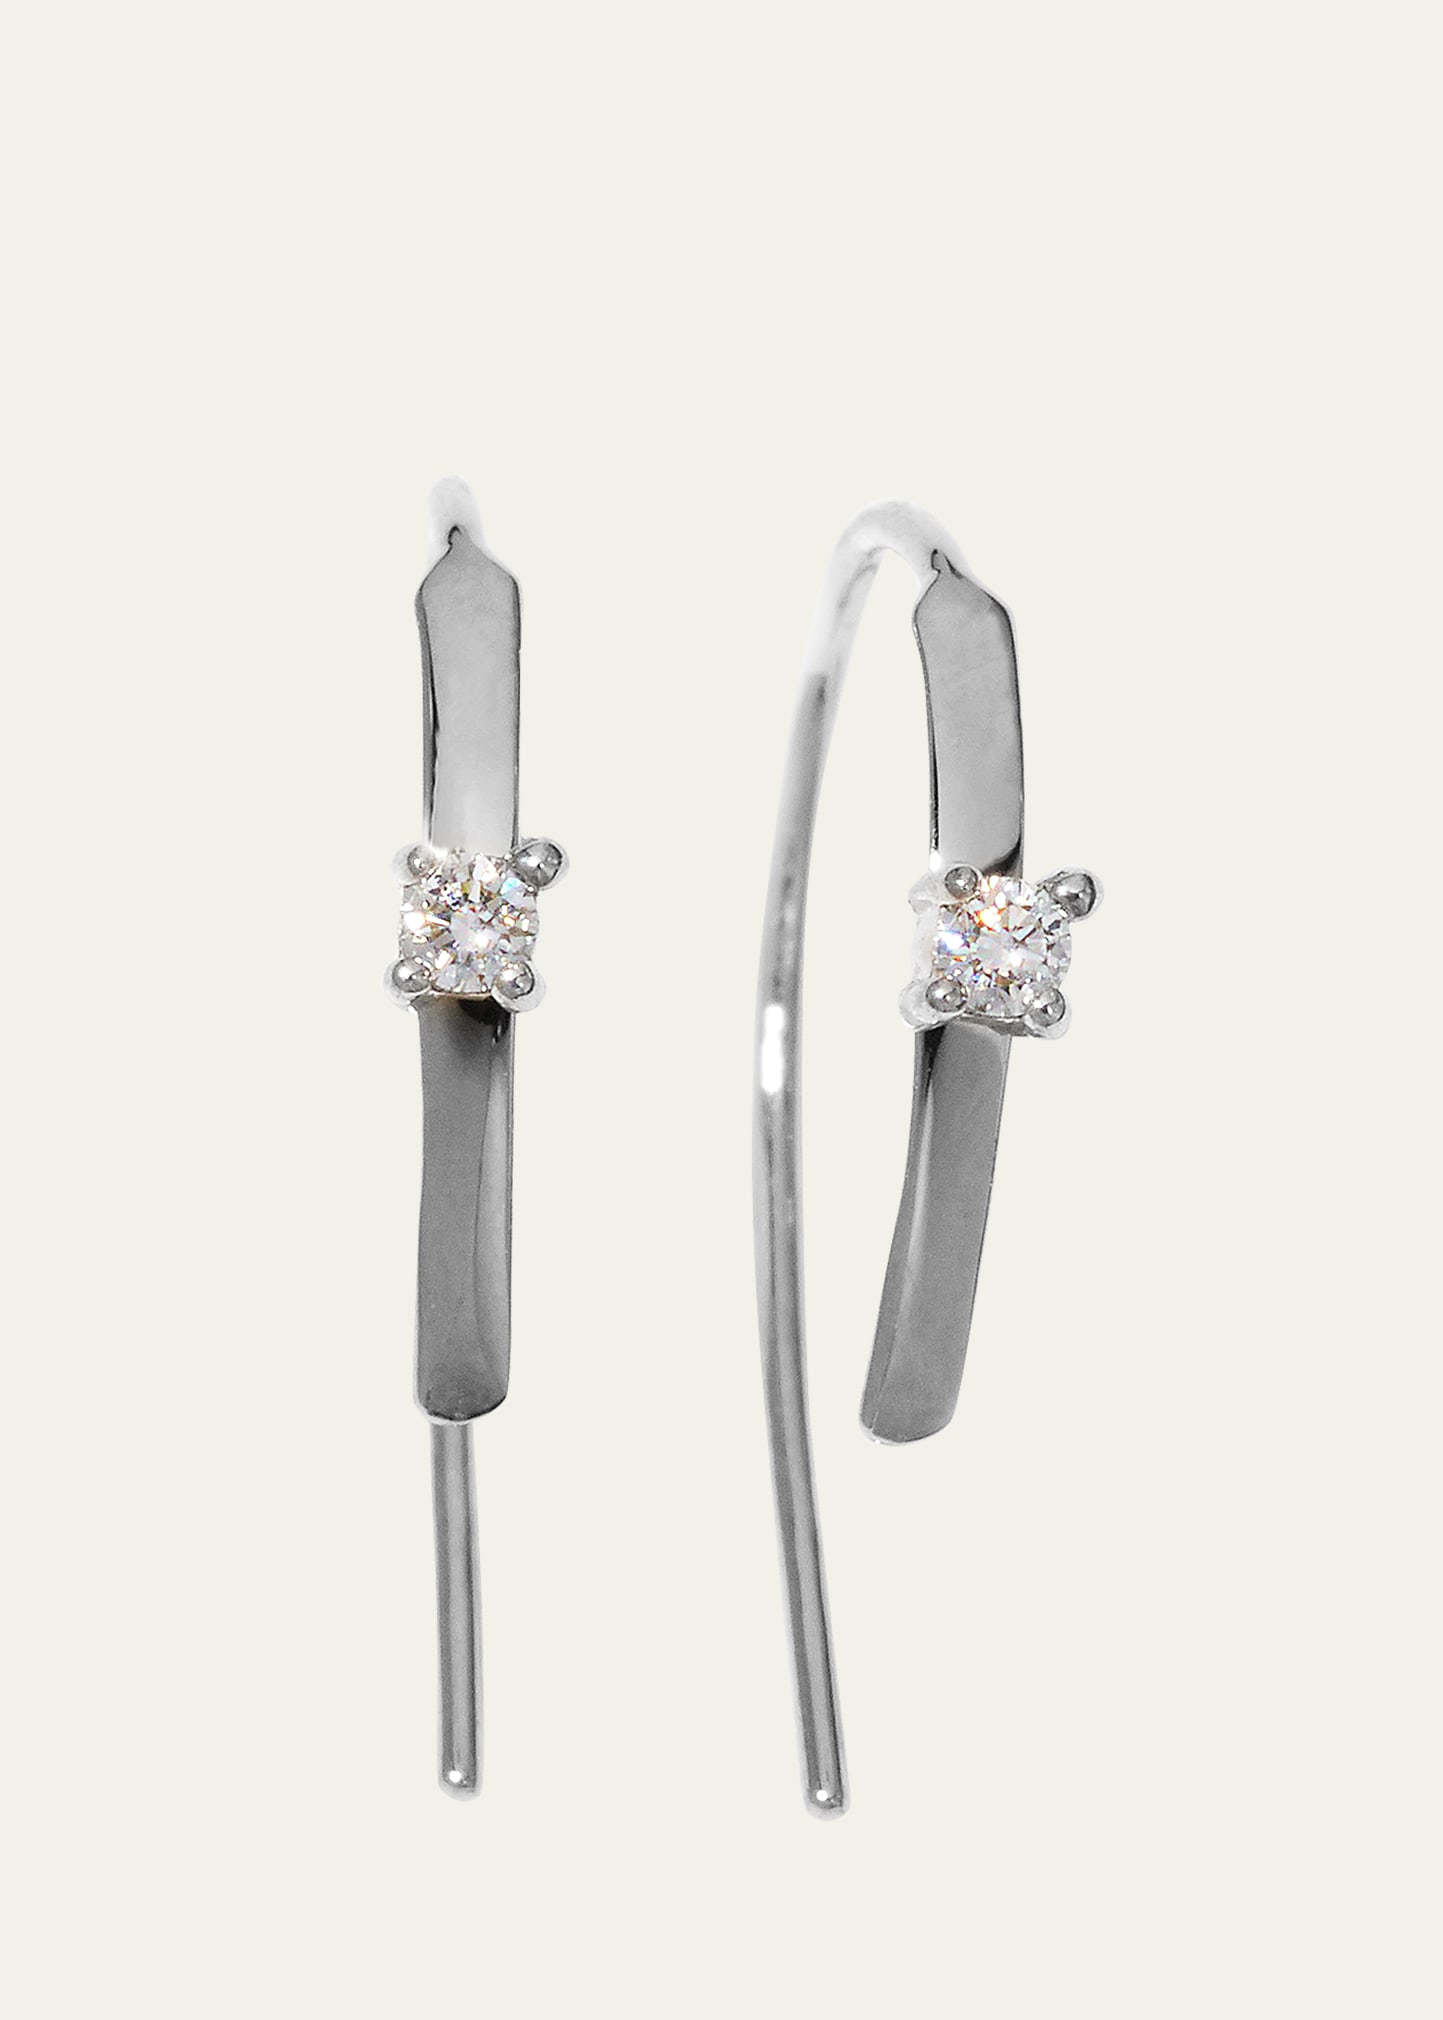 LANA JEWELRY Mini Flat Hooked on Hoop Earrings with Diamonds, 15mm